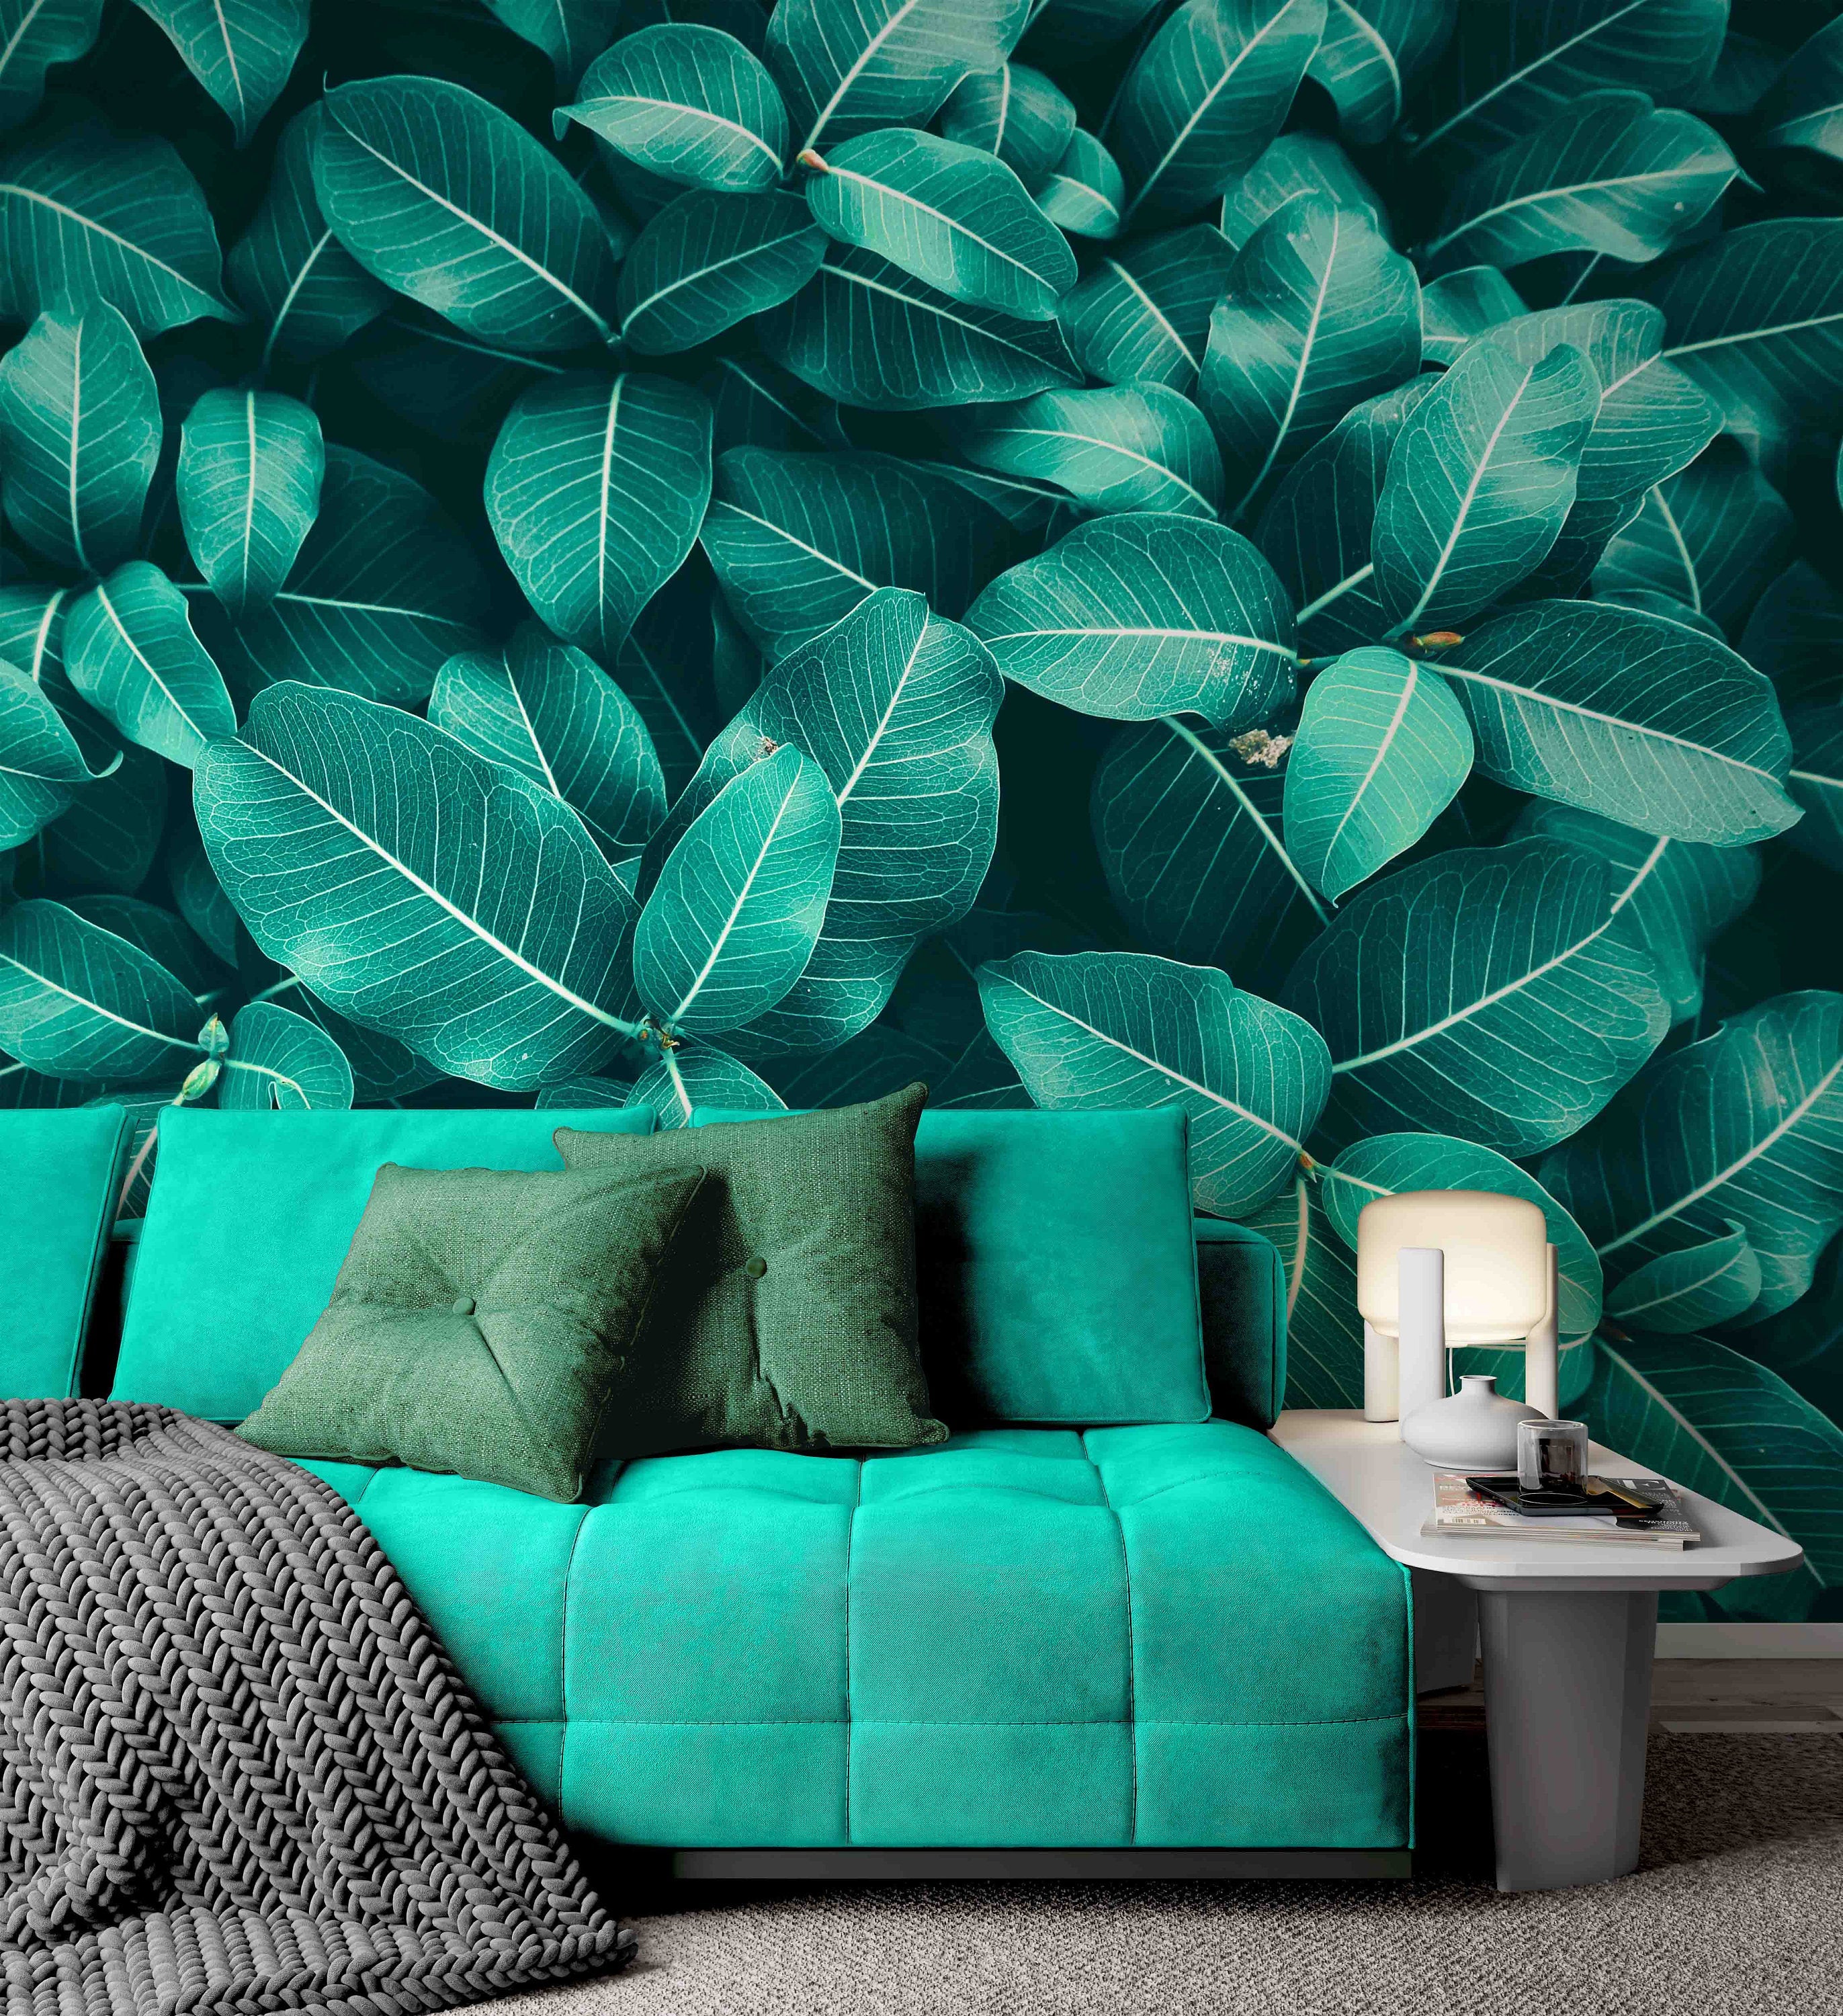 Blue Green Tone Leaves Modern Design Background Wallpaper Restaurant Living Room Cafe Office Bedroom Mural Home Wall Art Removable